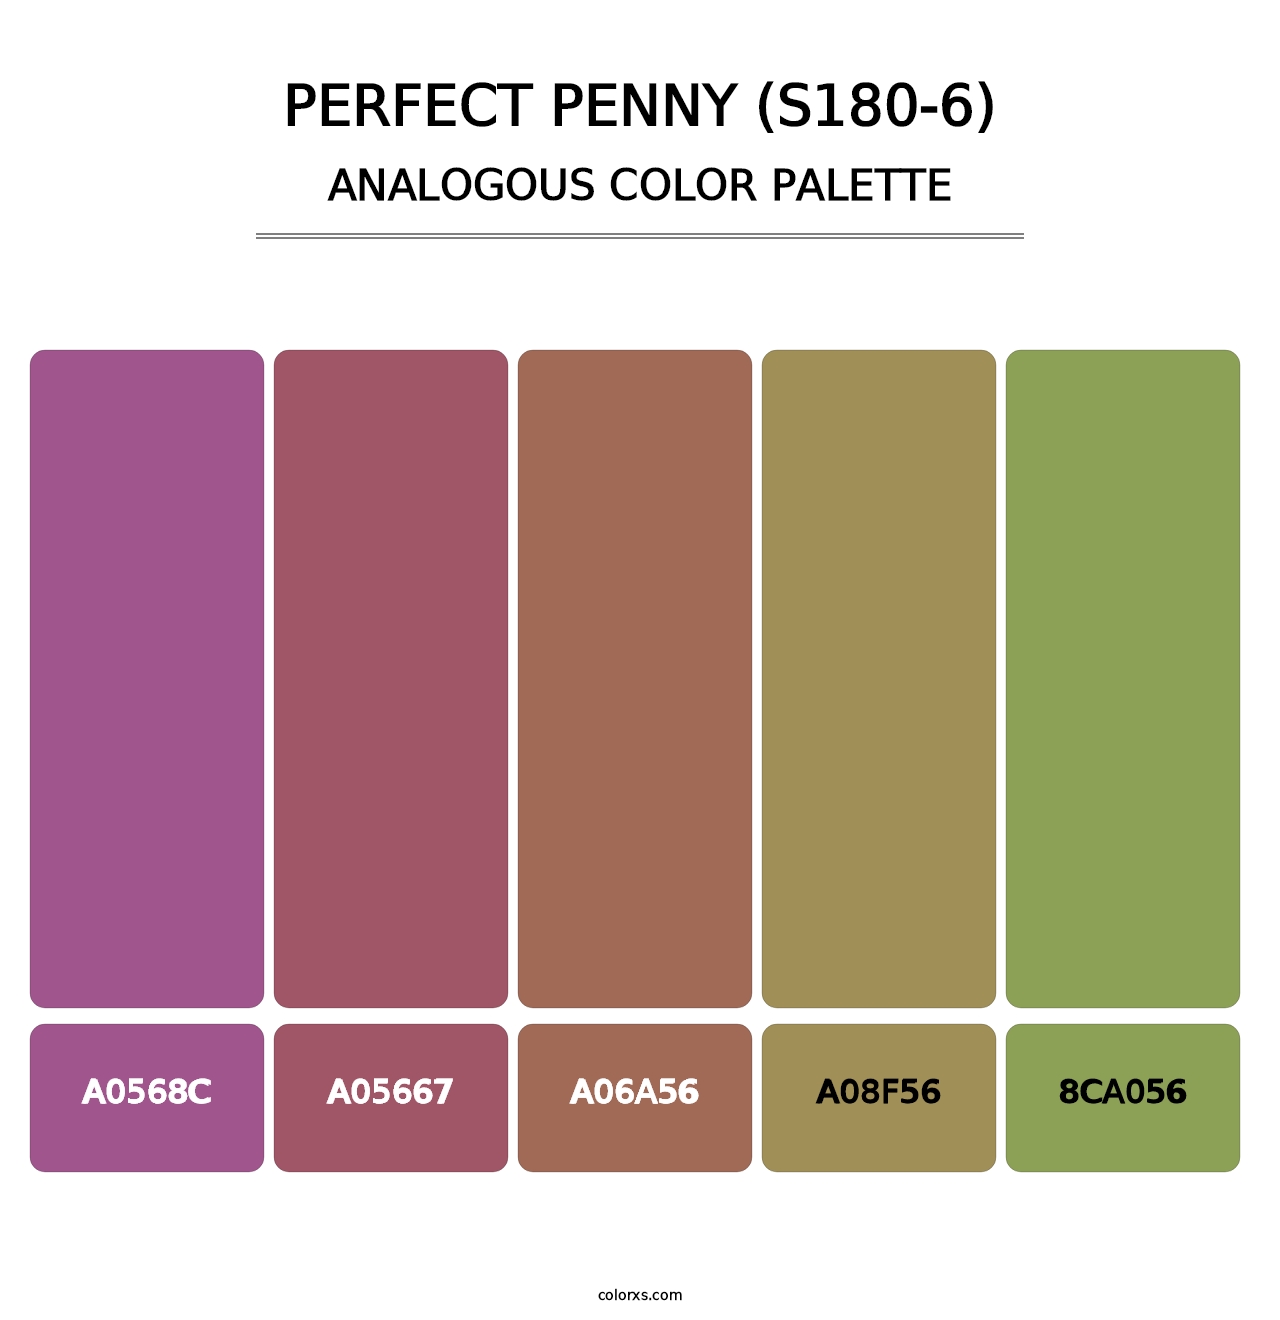 Perfect Penny (S180-6) - Analogous Color Palette